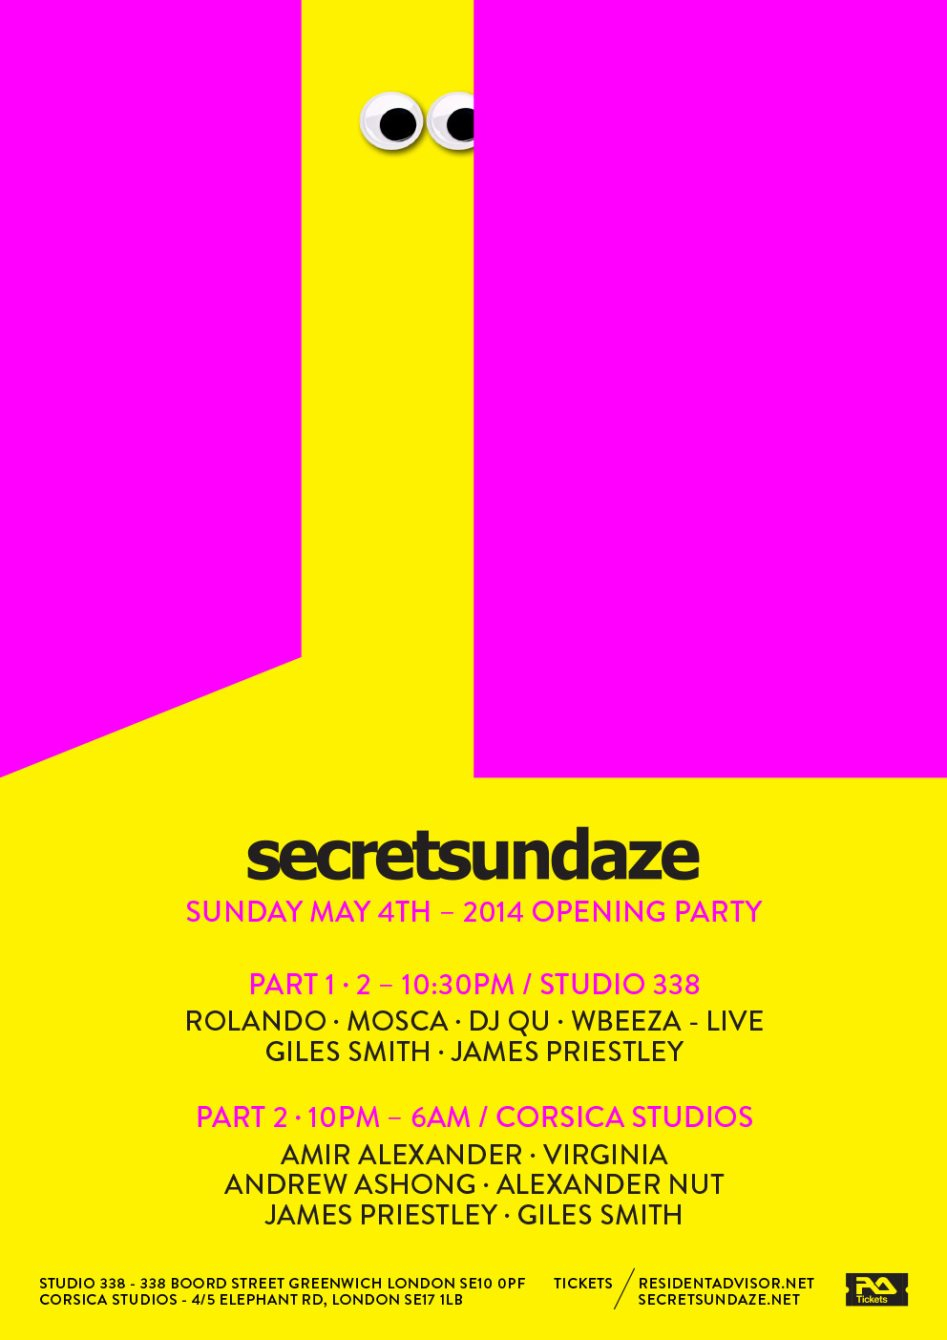 Secretsundaze 2014 Opening Party with Rolando, Mosca, DJ Qu, Amir Alexander - Flyer front